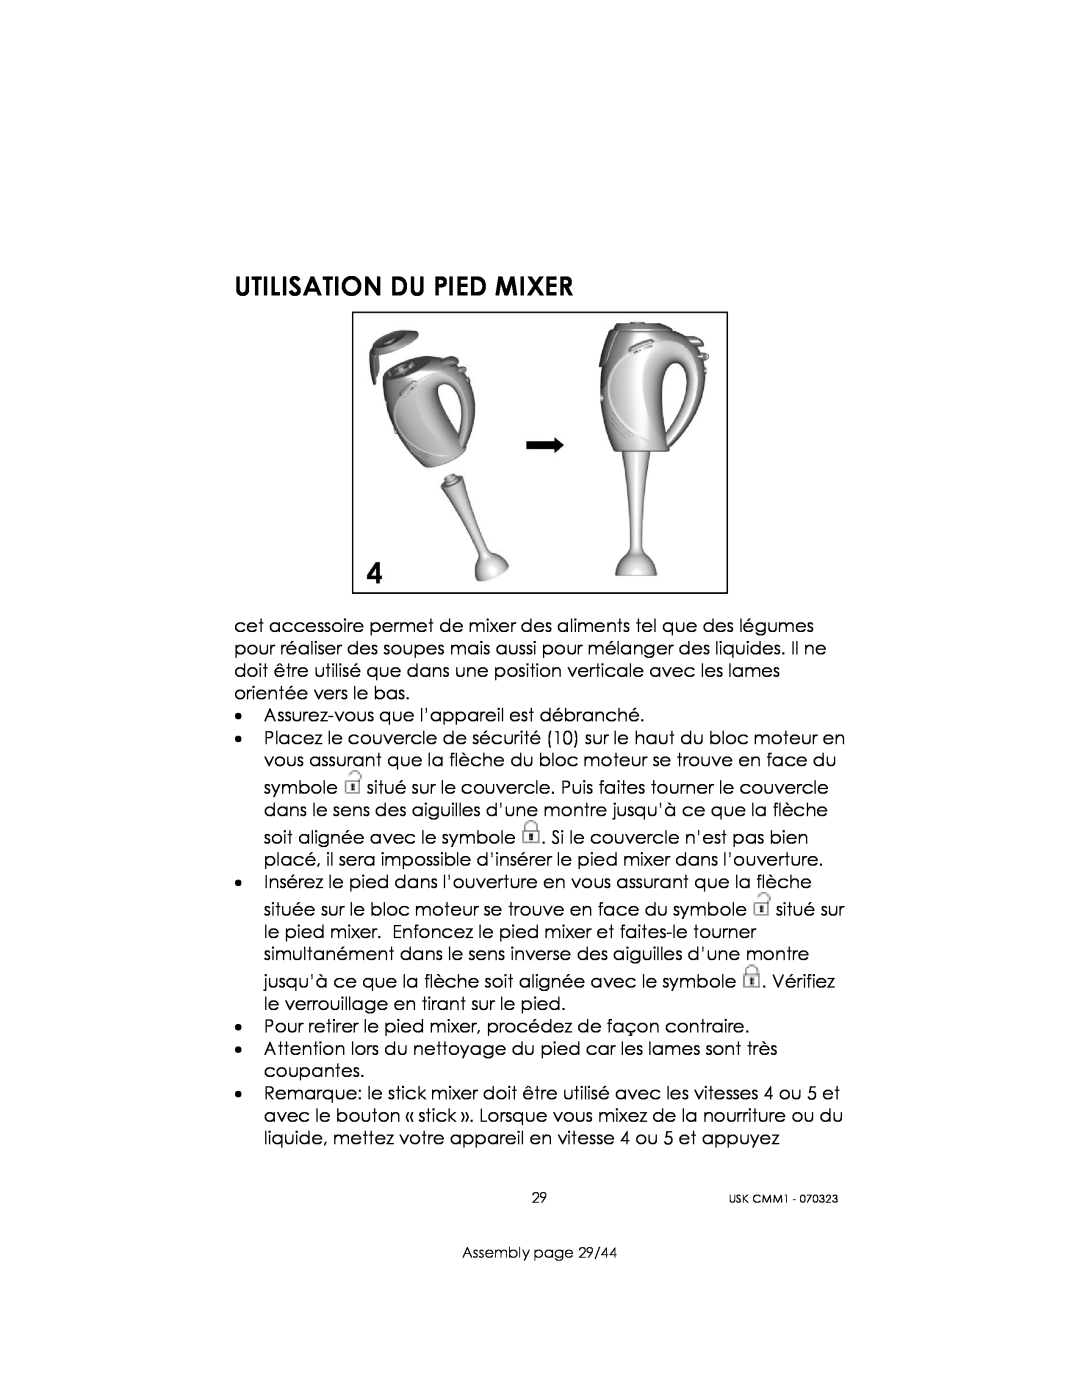 Kalorik USK CMM 1 manual Utilisation Du Pied Mixer, Assembly page 29/44 